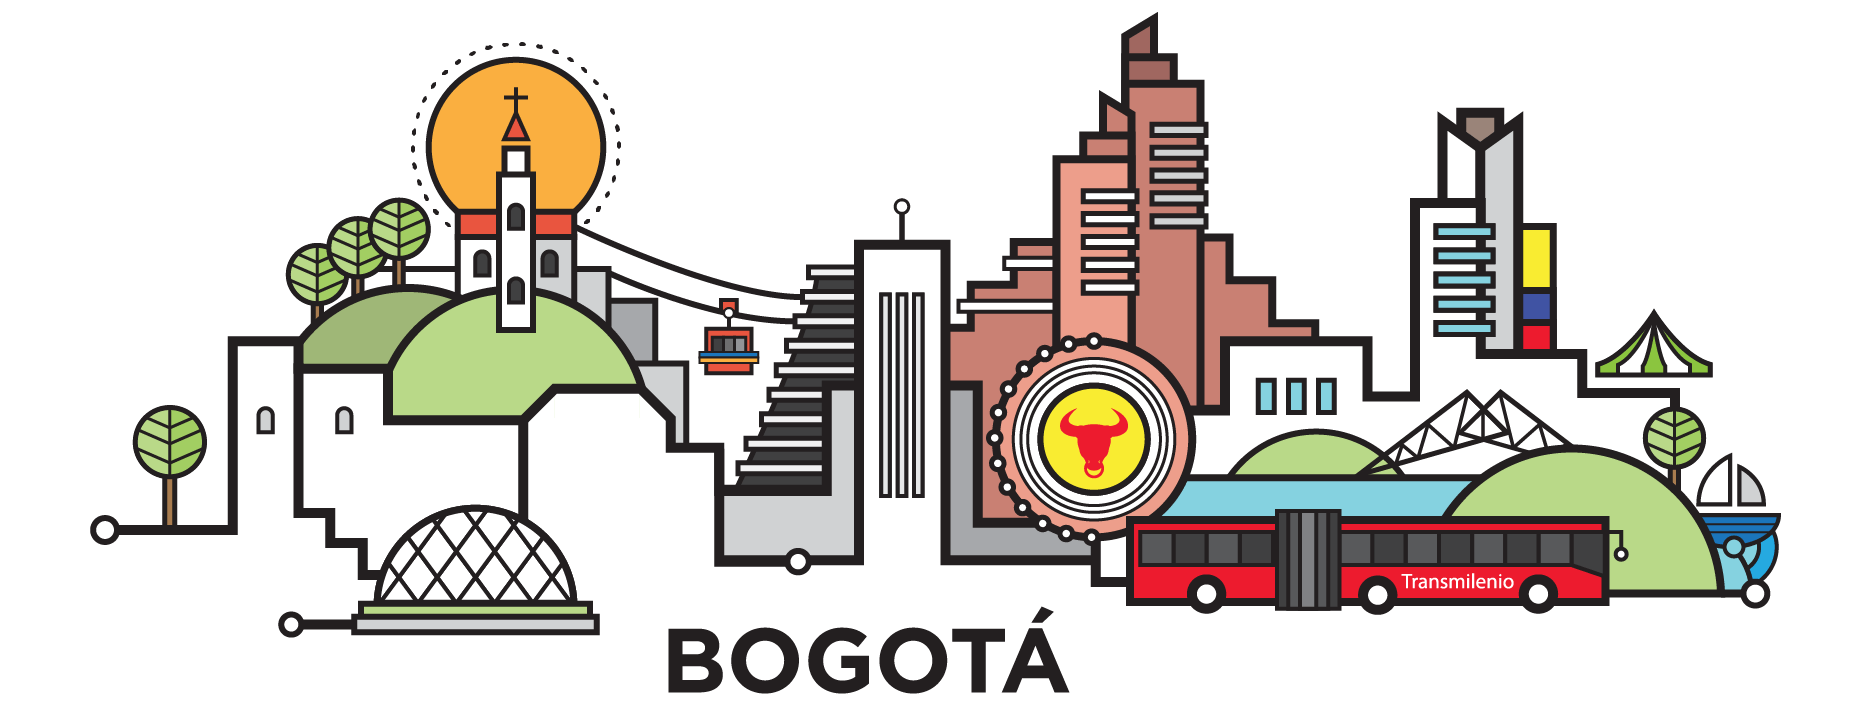 bogota-cityline-illustration-by-loogart